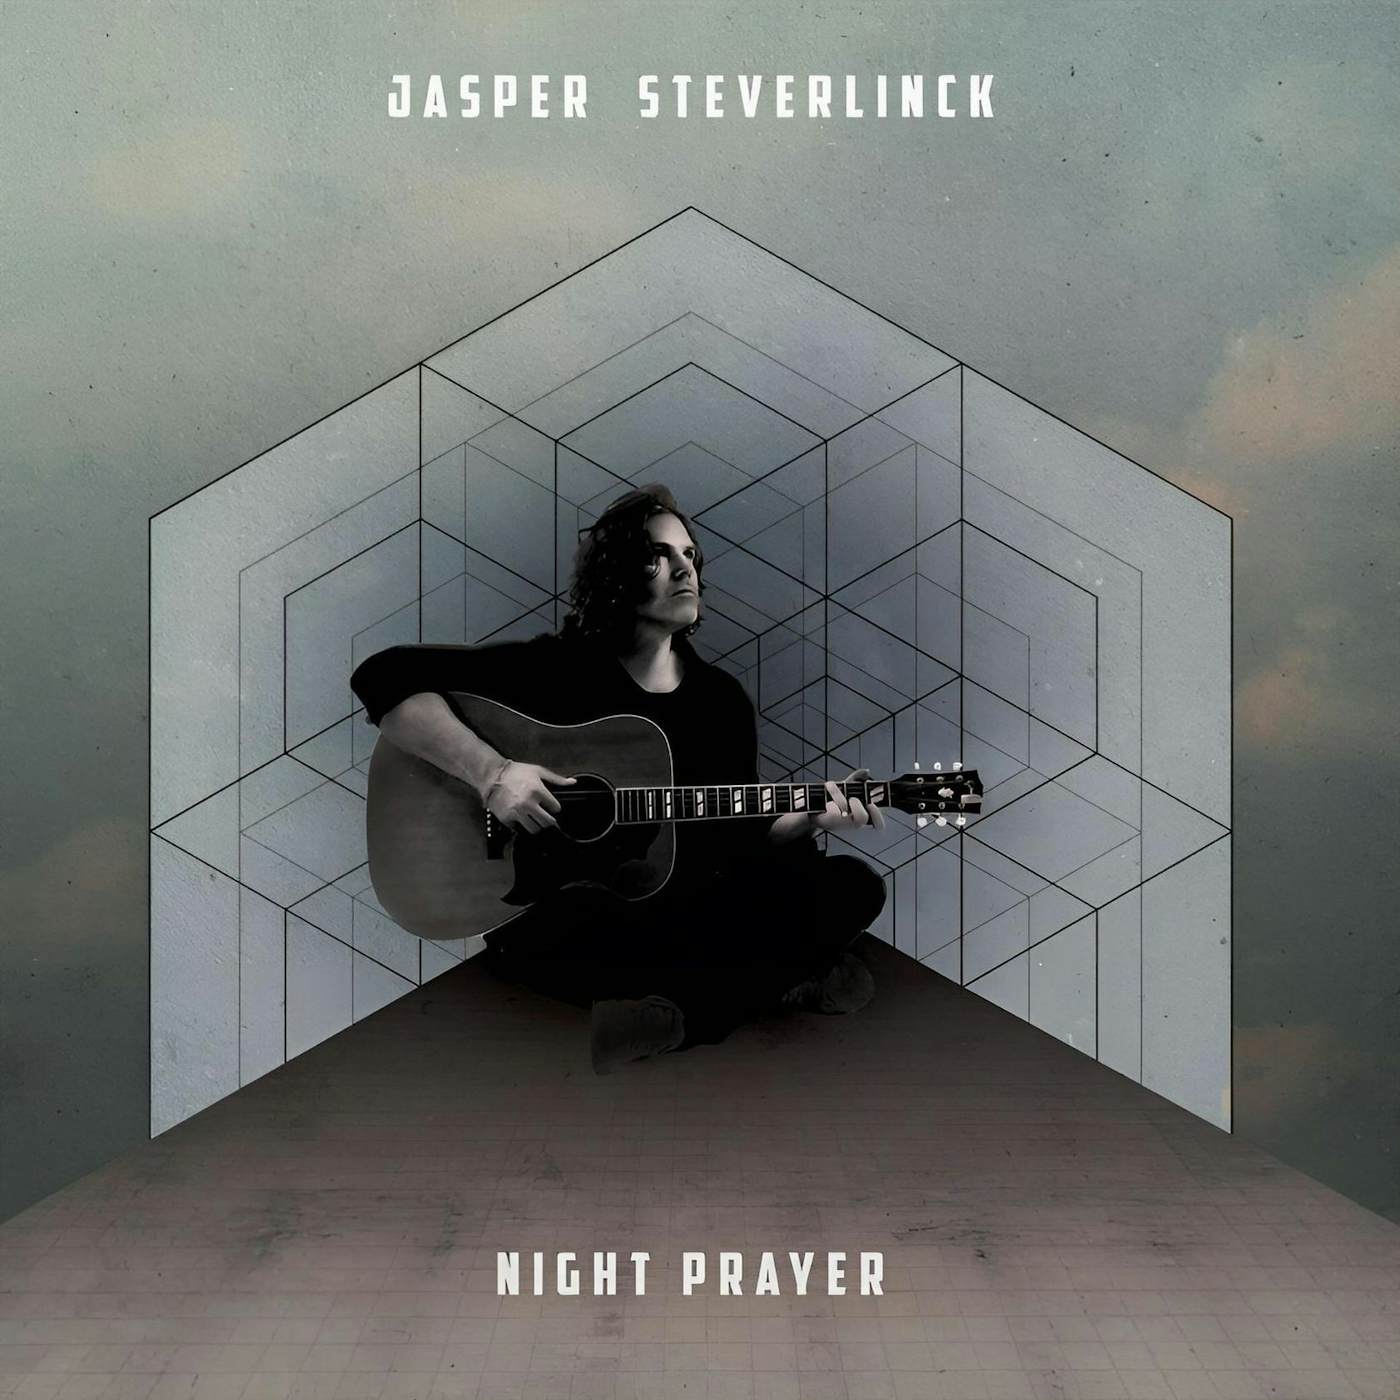 Jasper Steverlinck Night Prayer - Limited 180-Gram Gold Vinyl Record